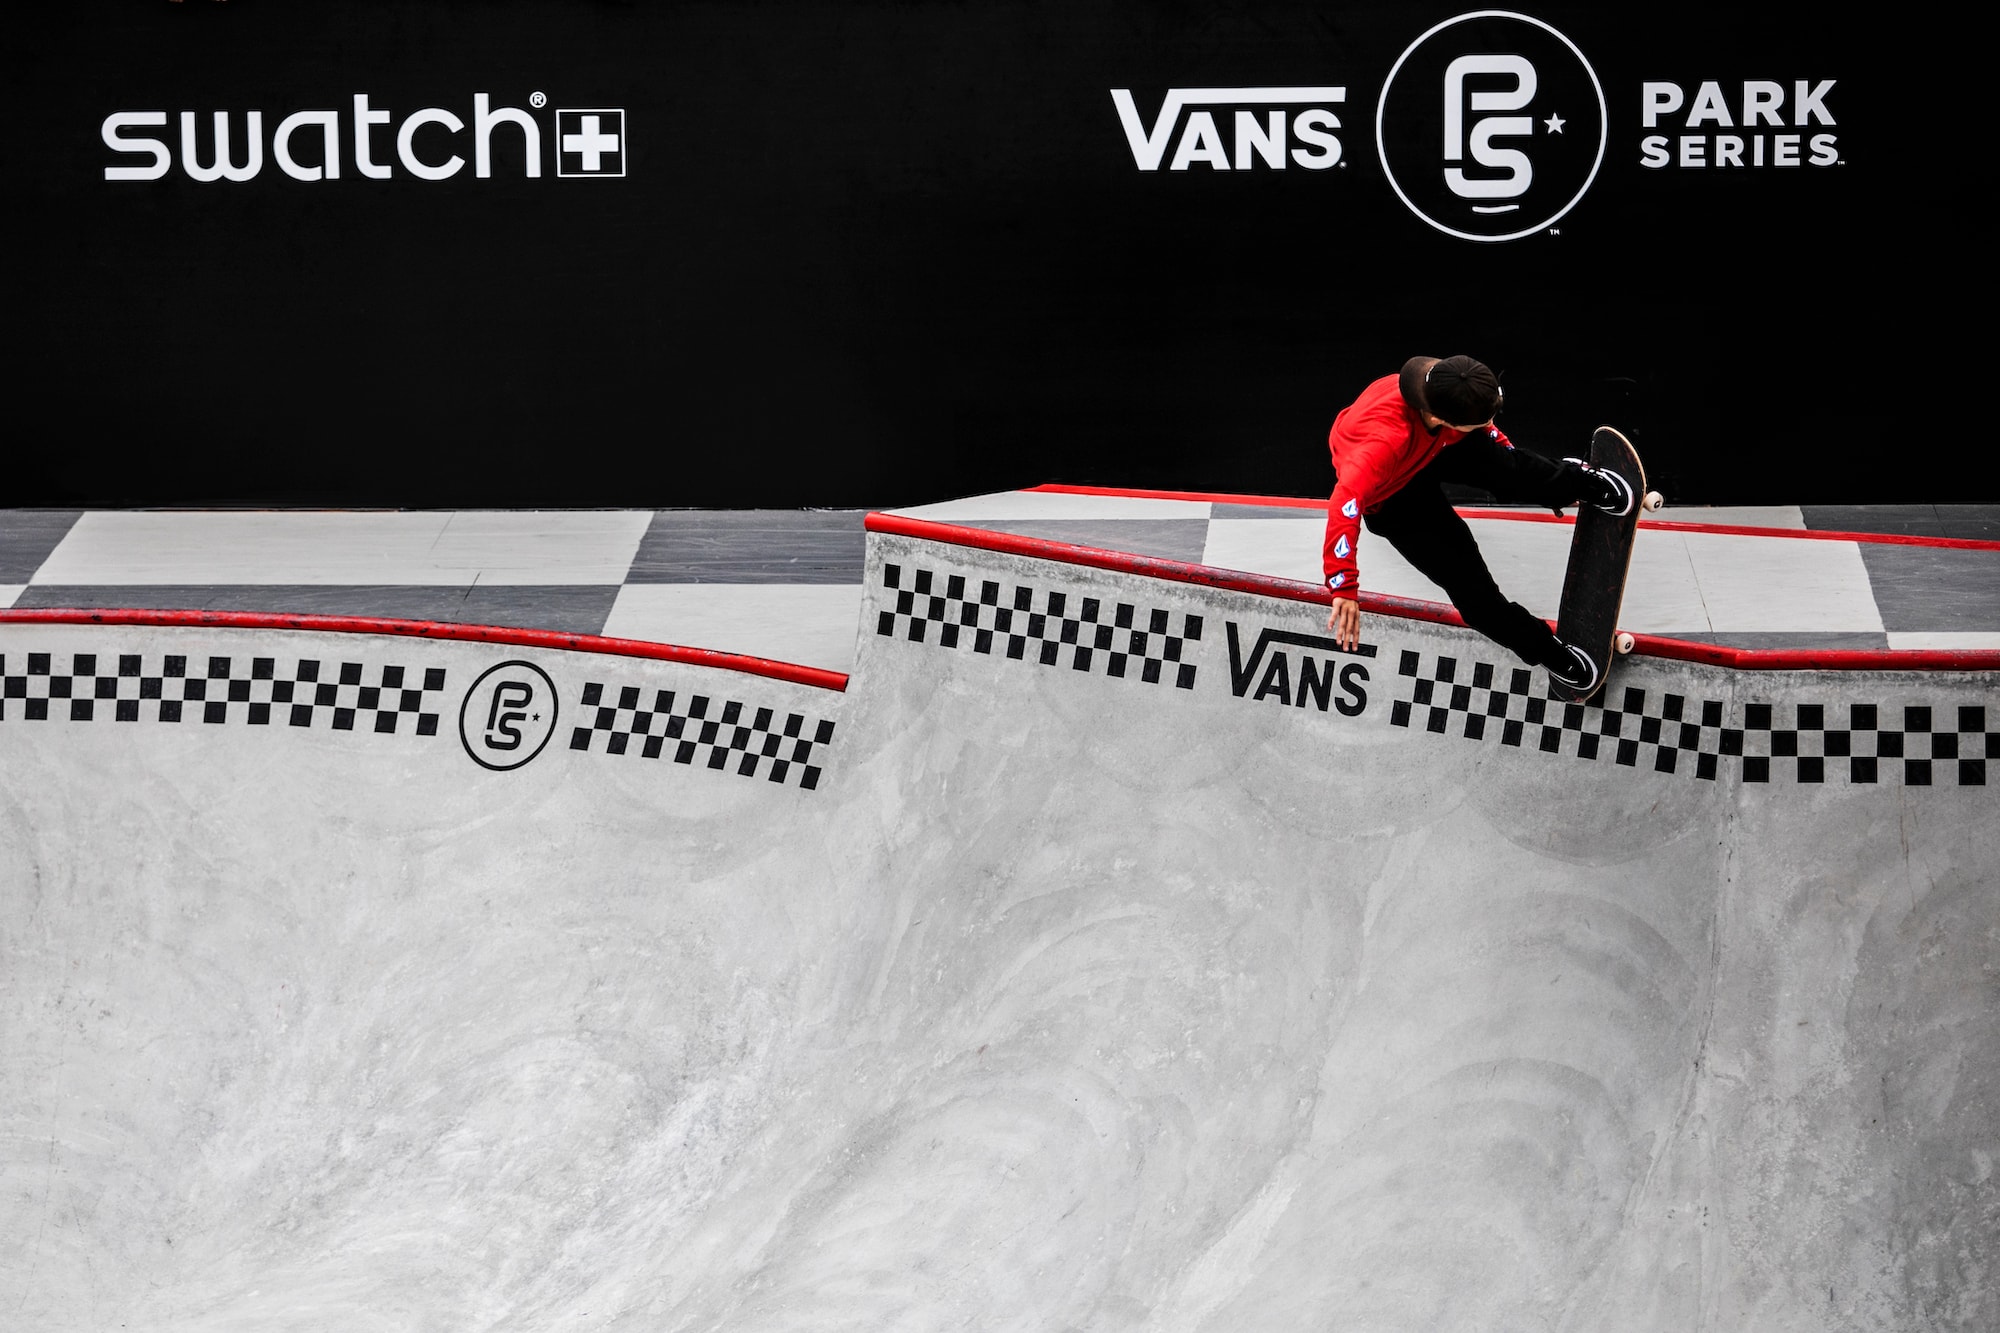 Swatch 助力 2019 Vans 职业公园滑板赛